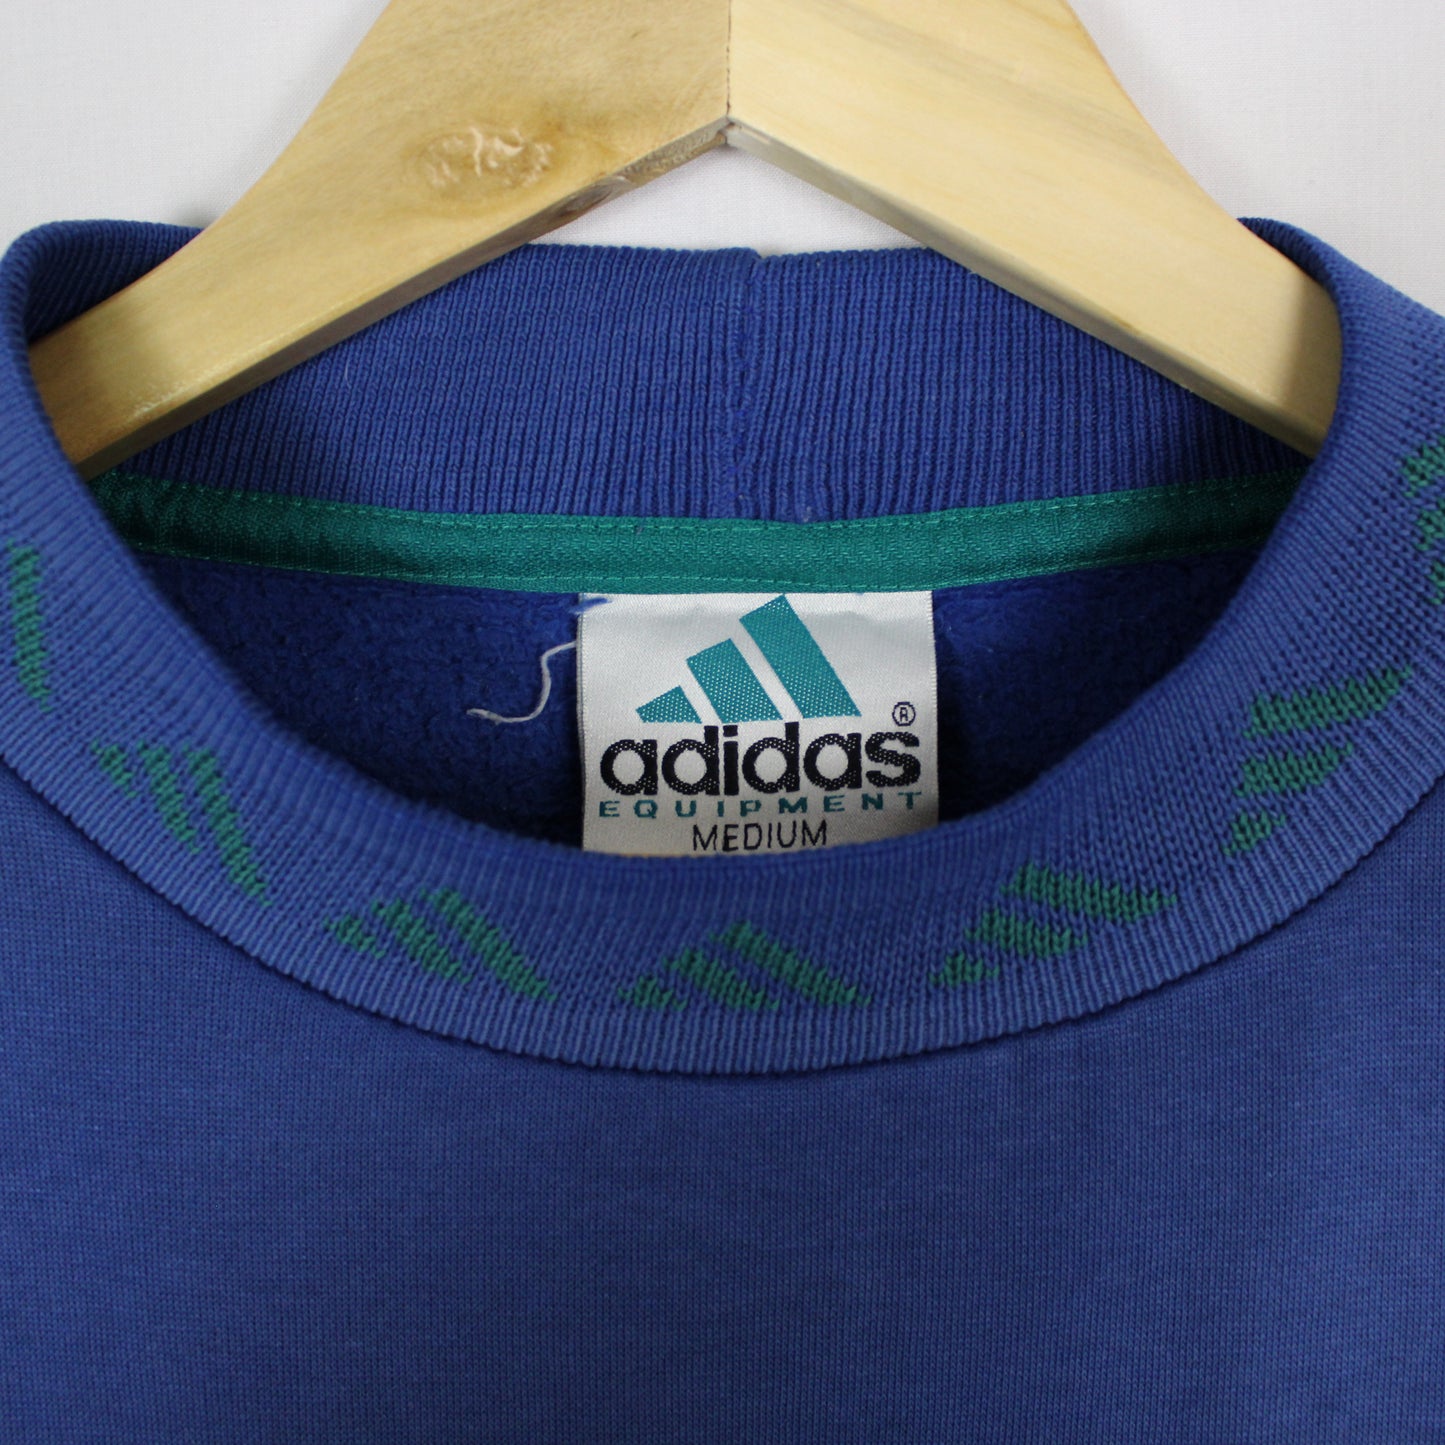 Vintage Adidas EQT Sweatshirt - M